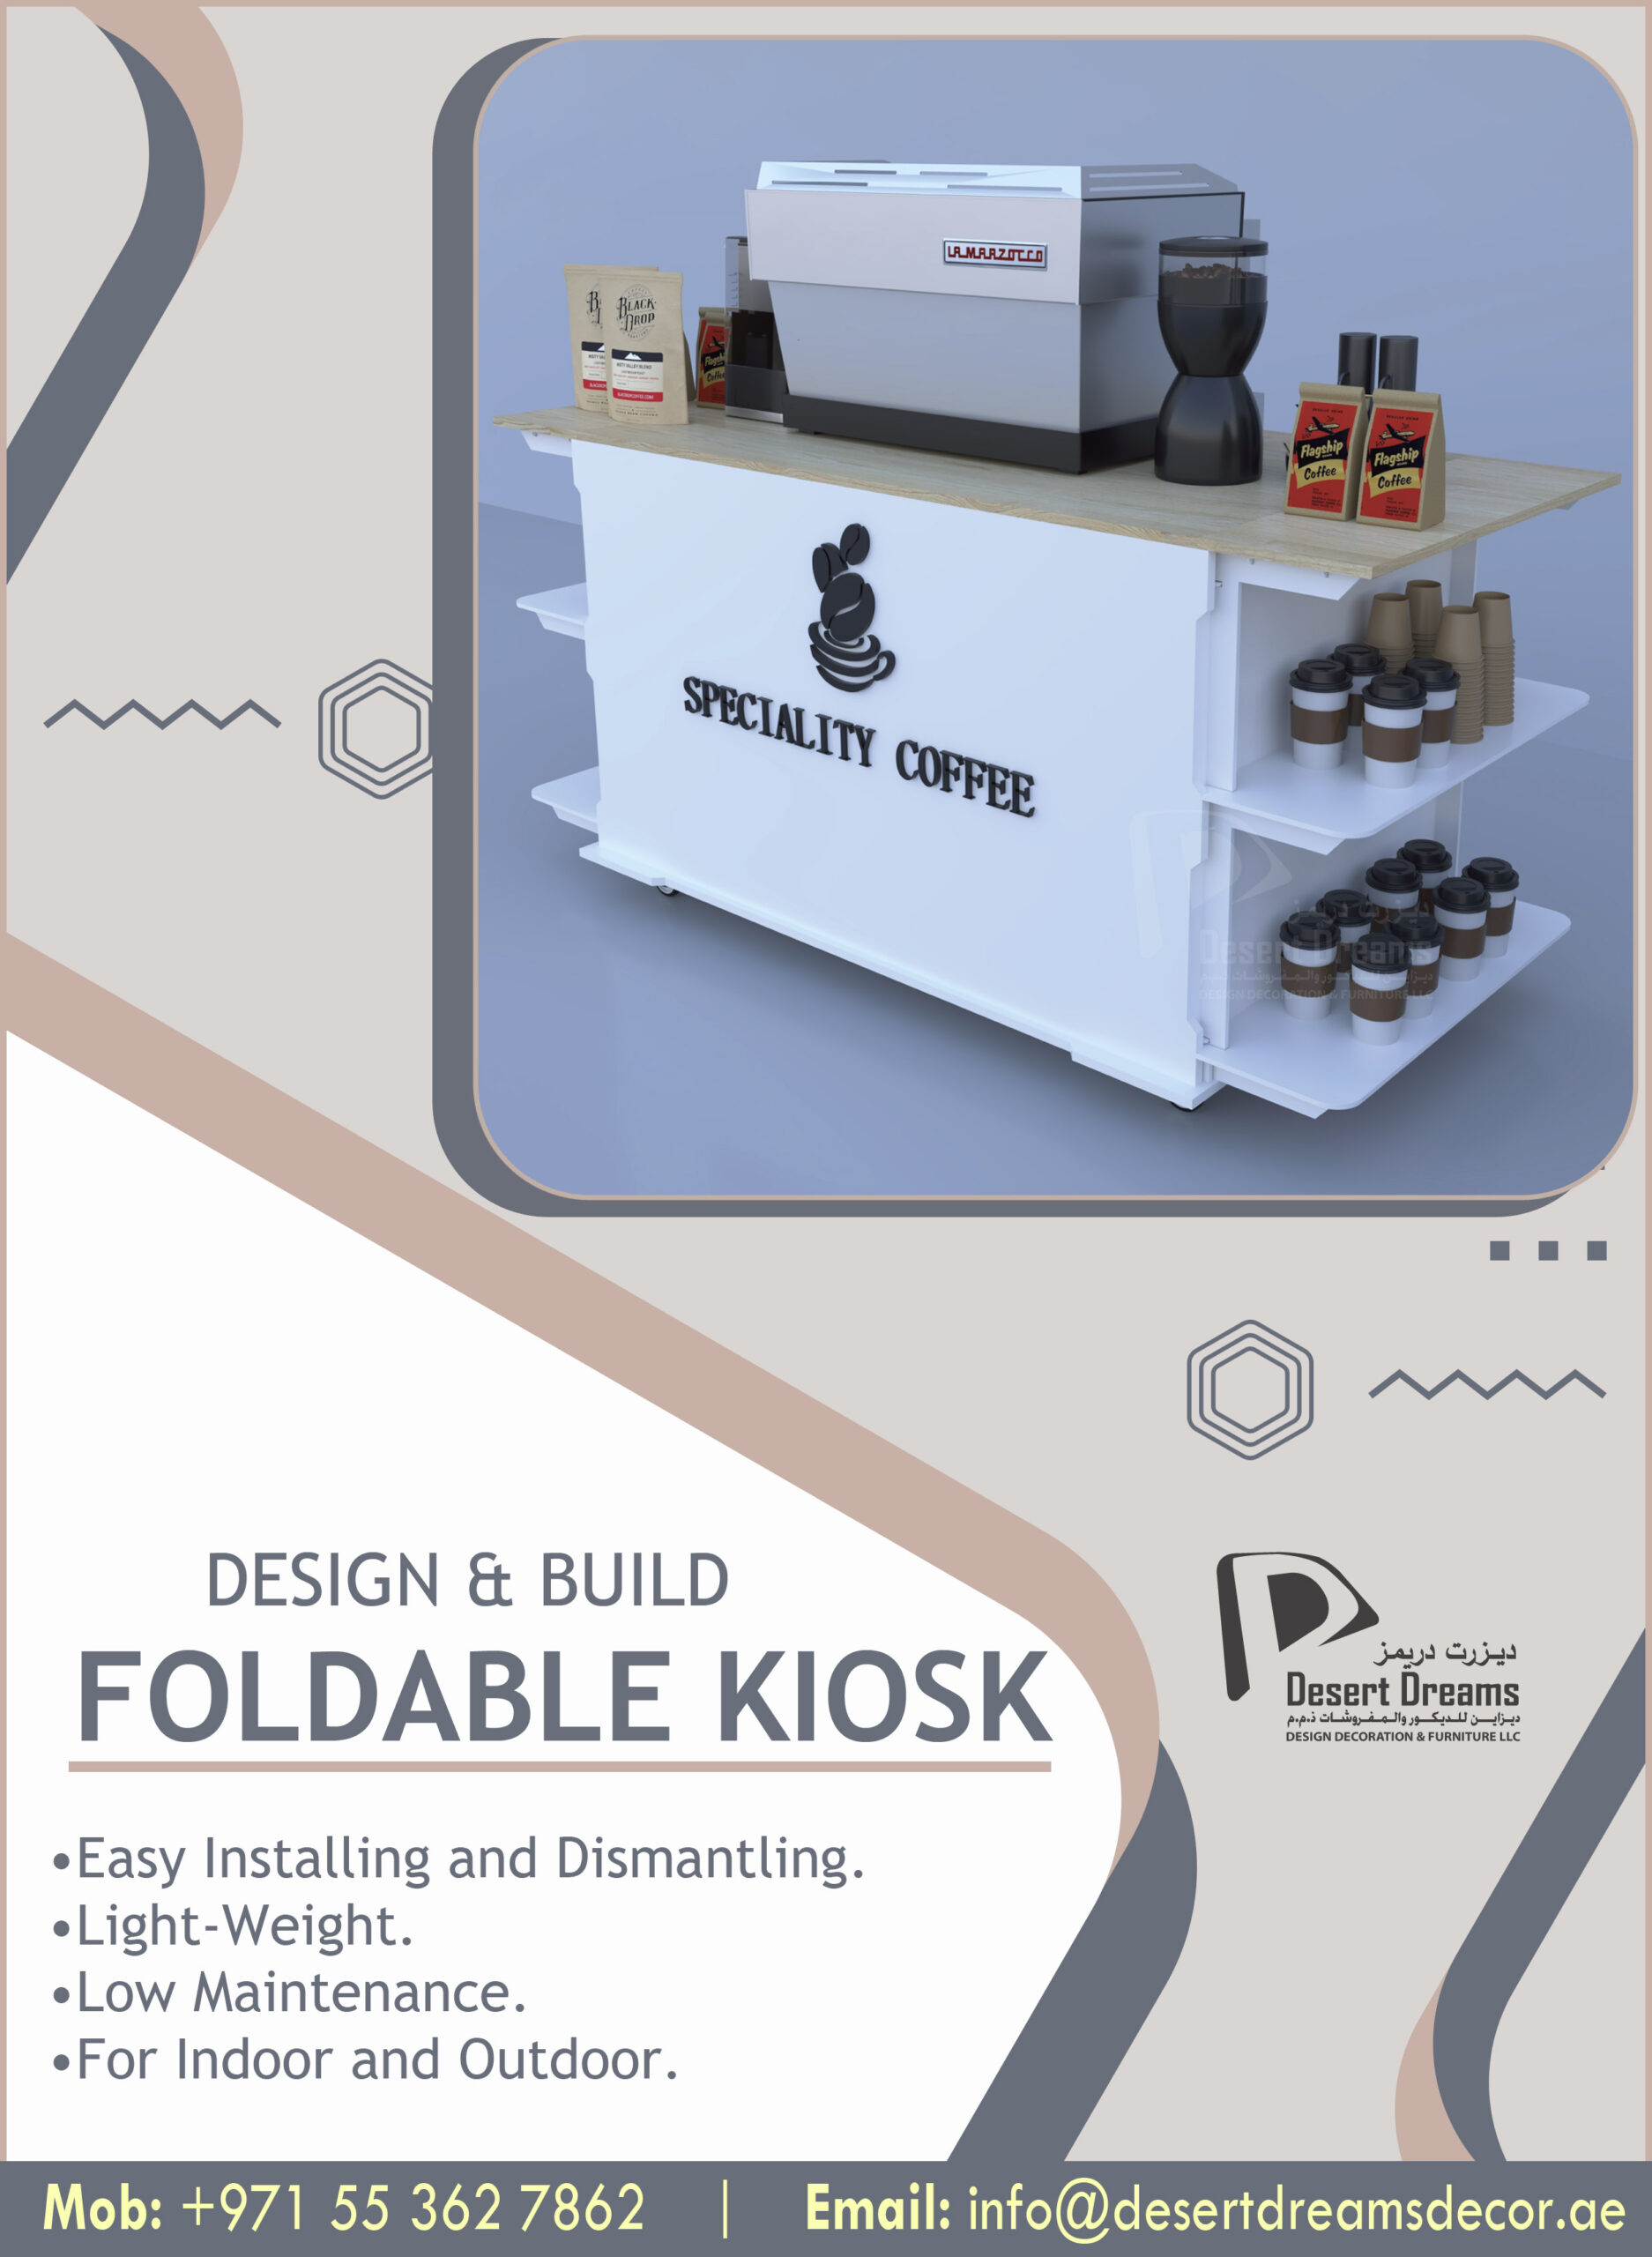 Foldable Kiosk Manufacturer and Suppliers in Abu Dhabi, Dubai.